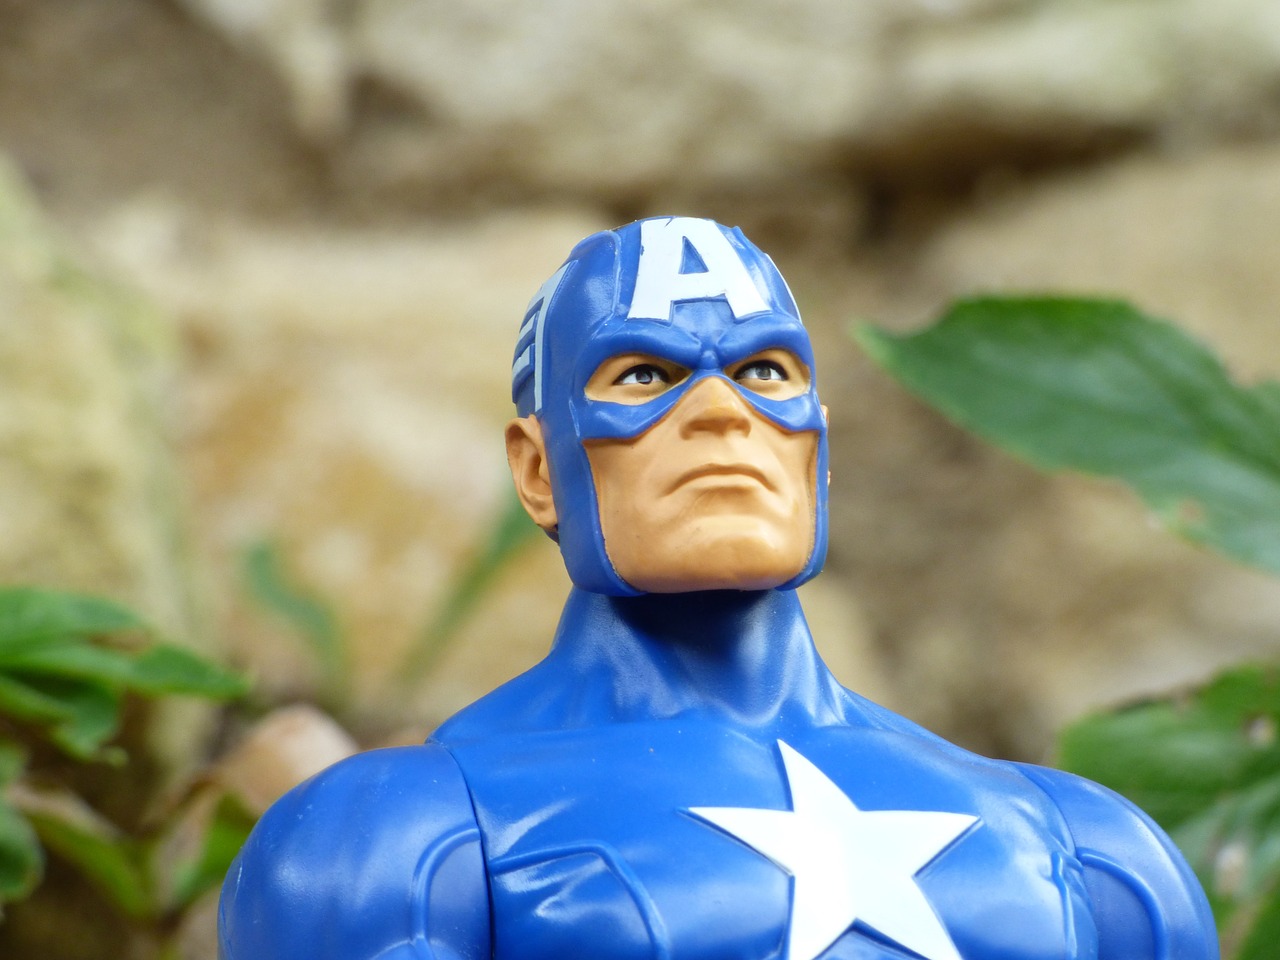 captain america super hero toy free photo